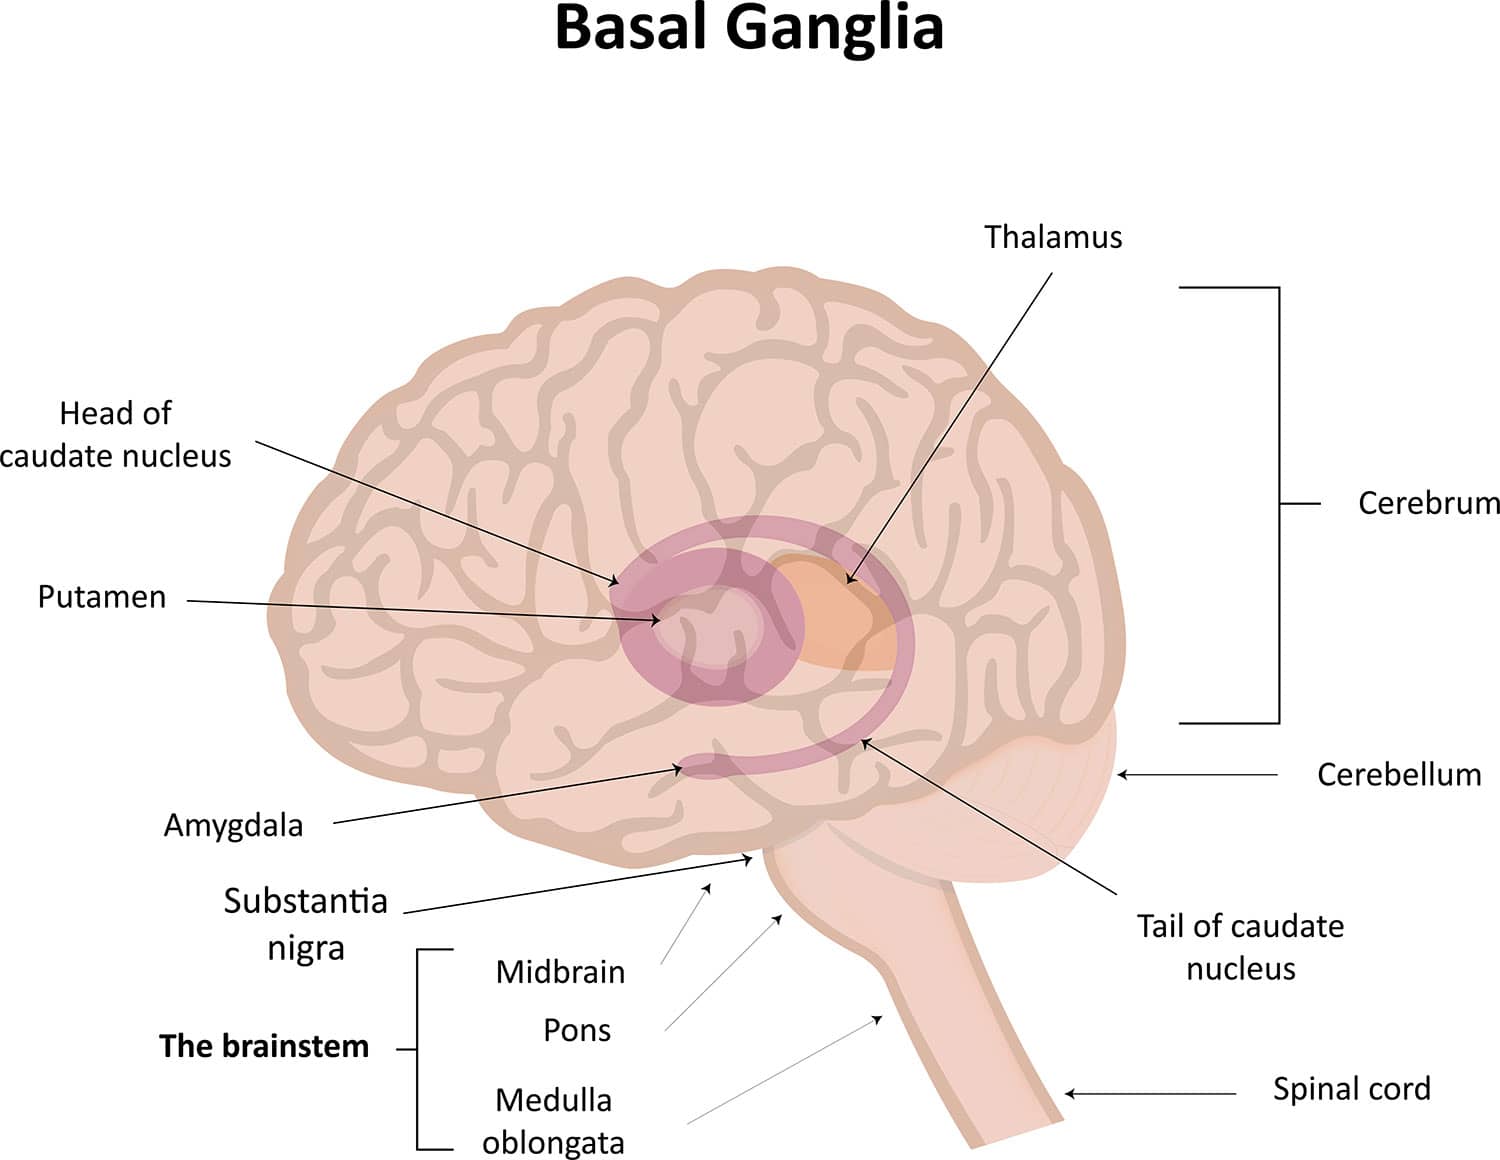 The Basal Ganglia Illustration.